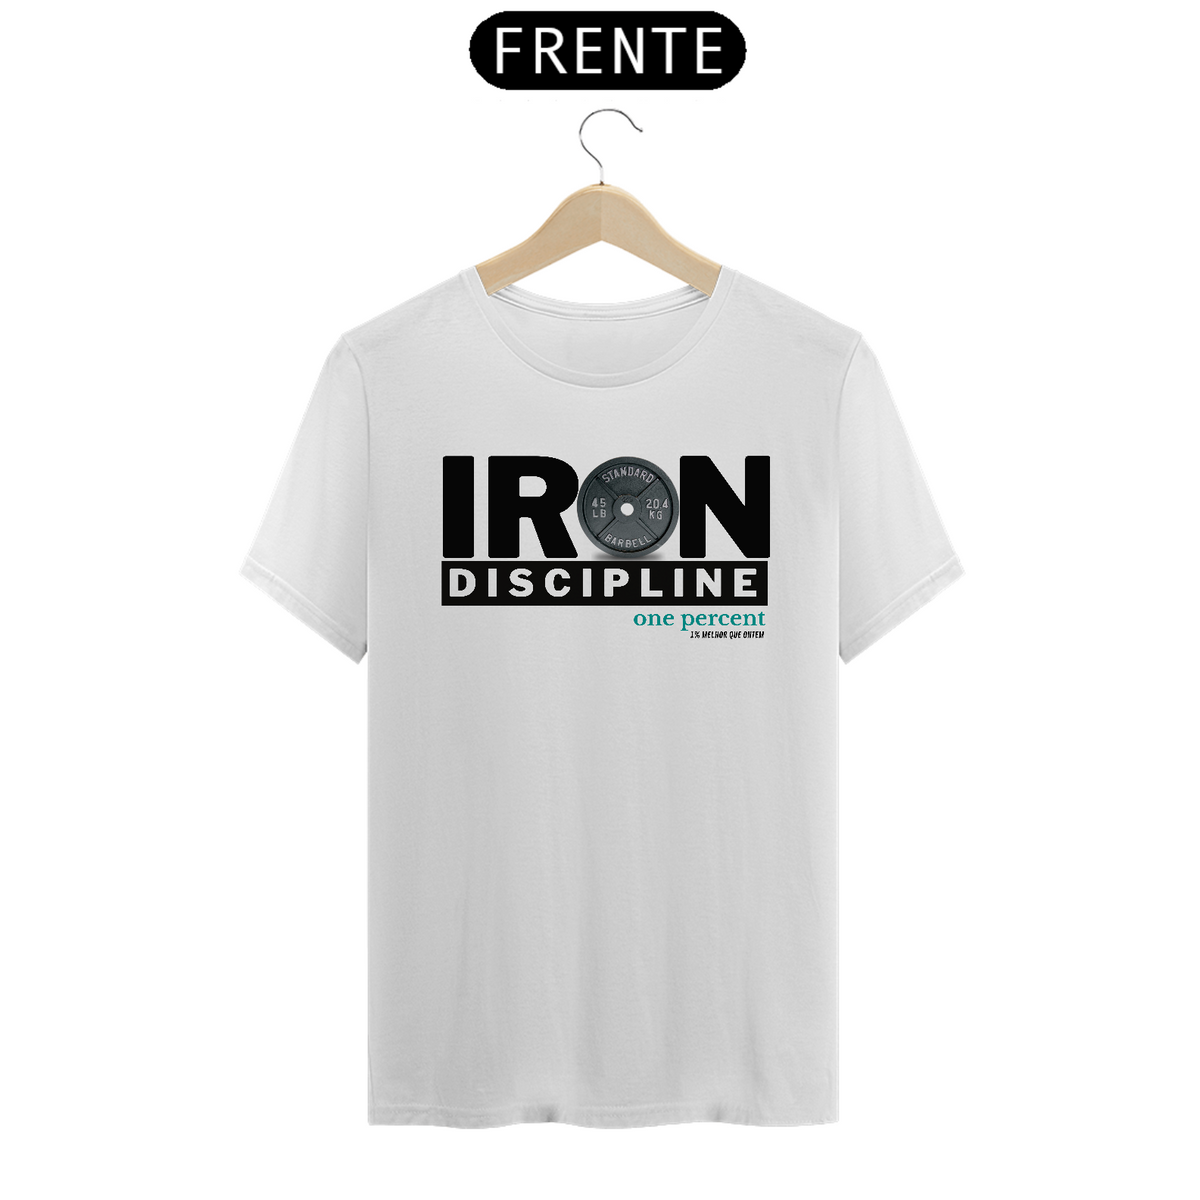 Nome do produto: iron discipline